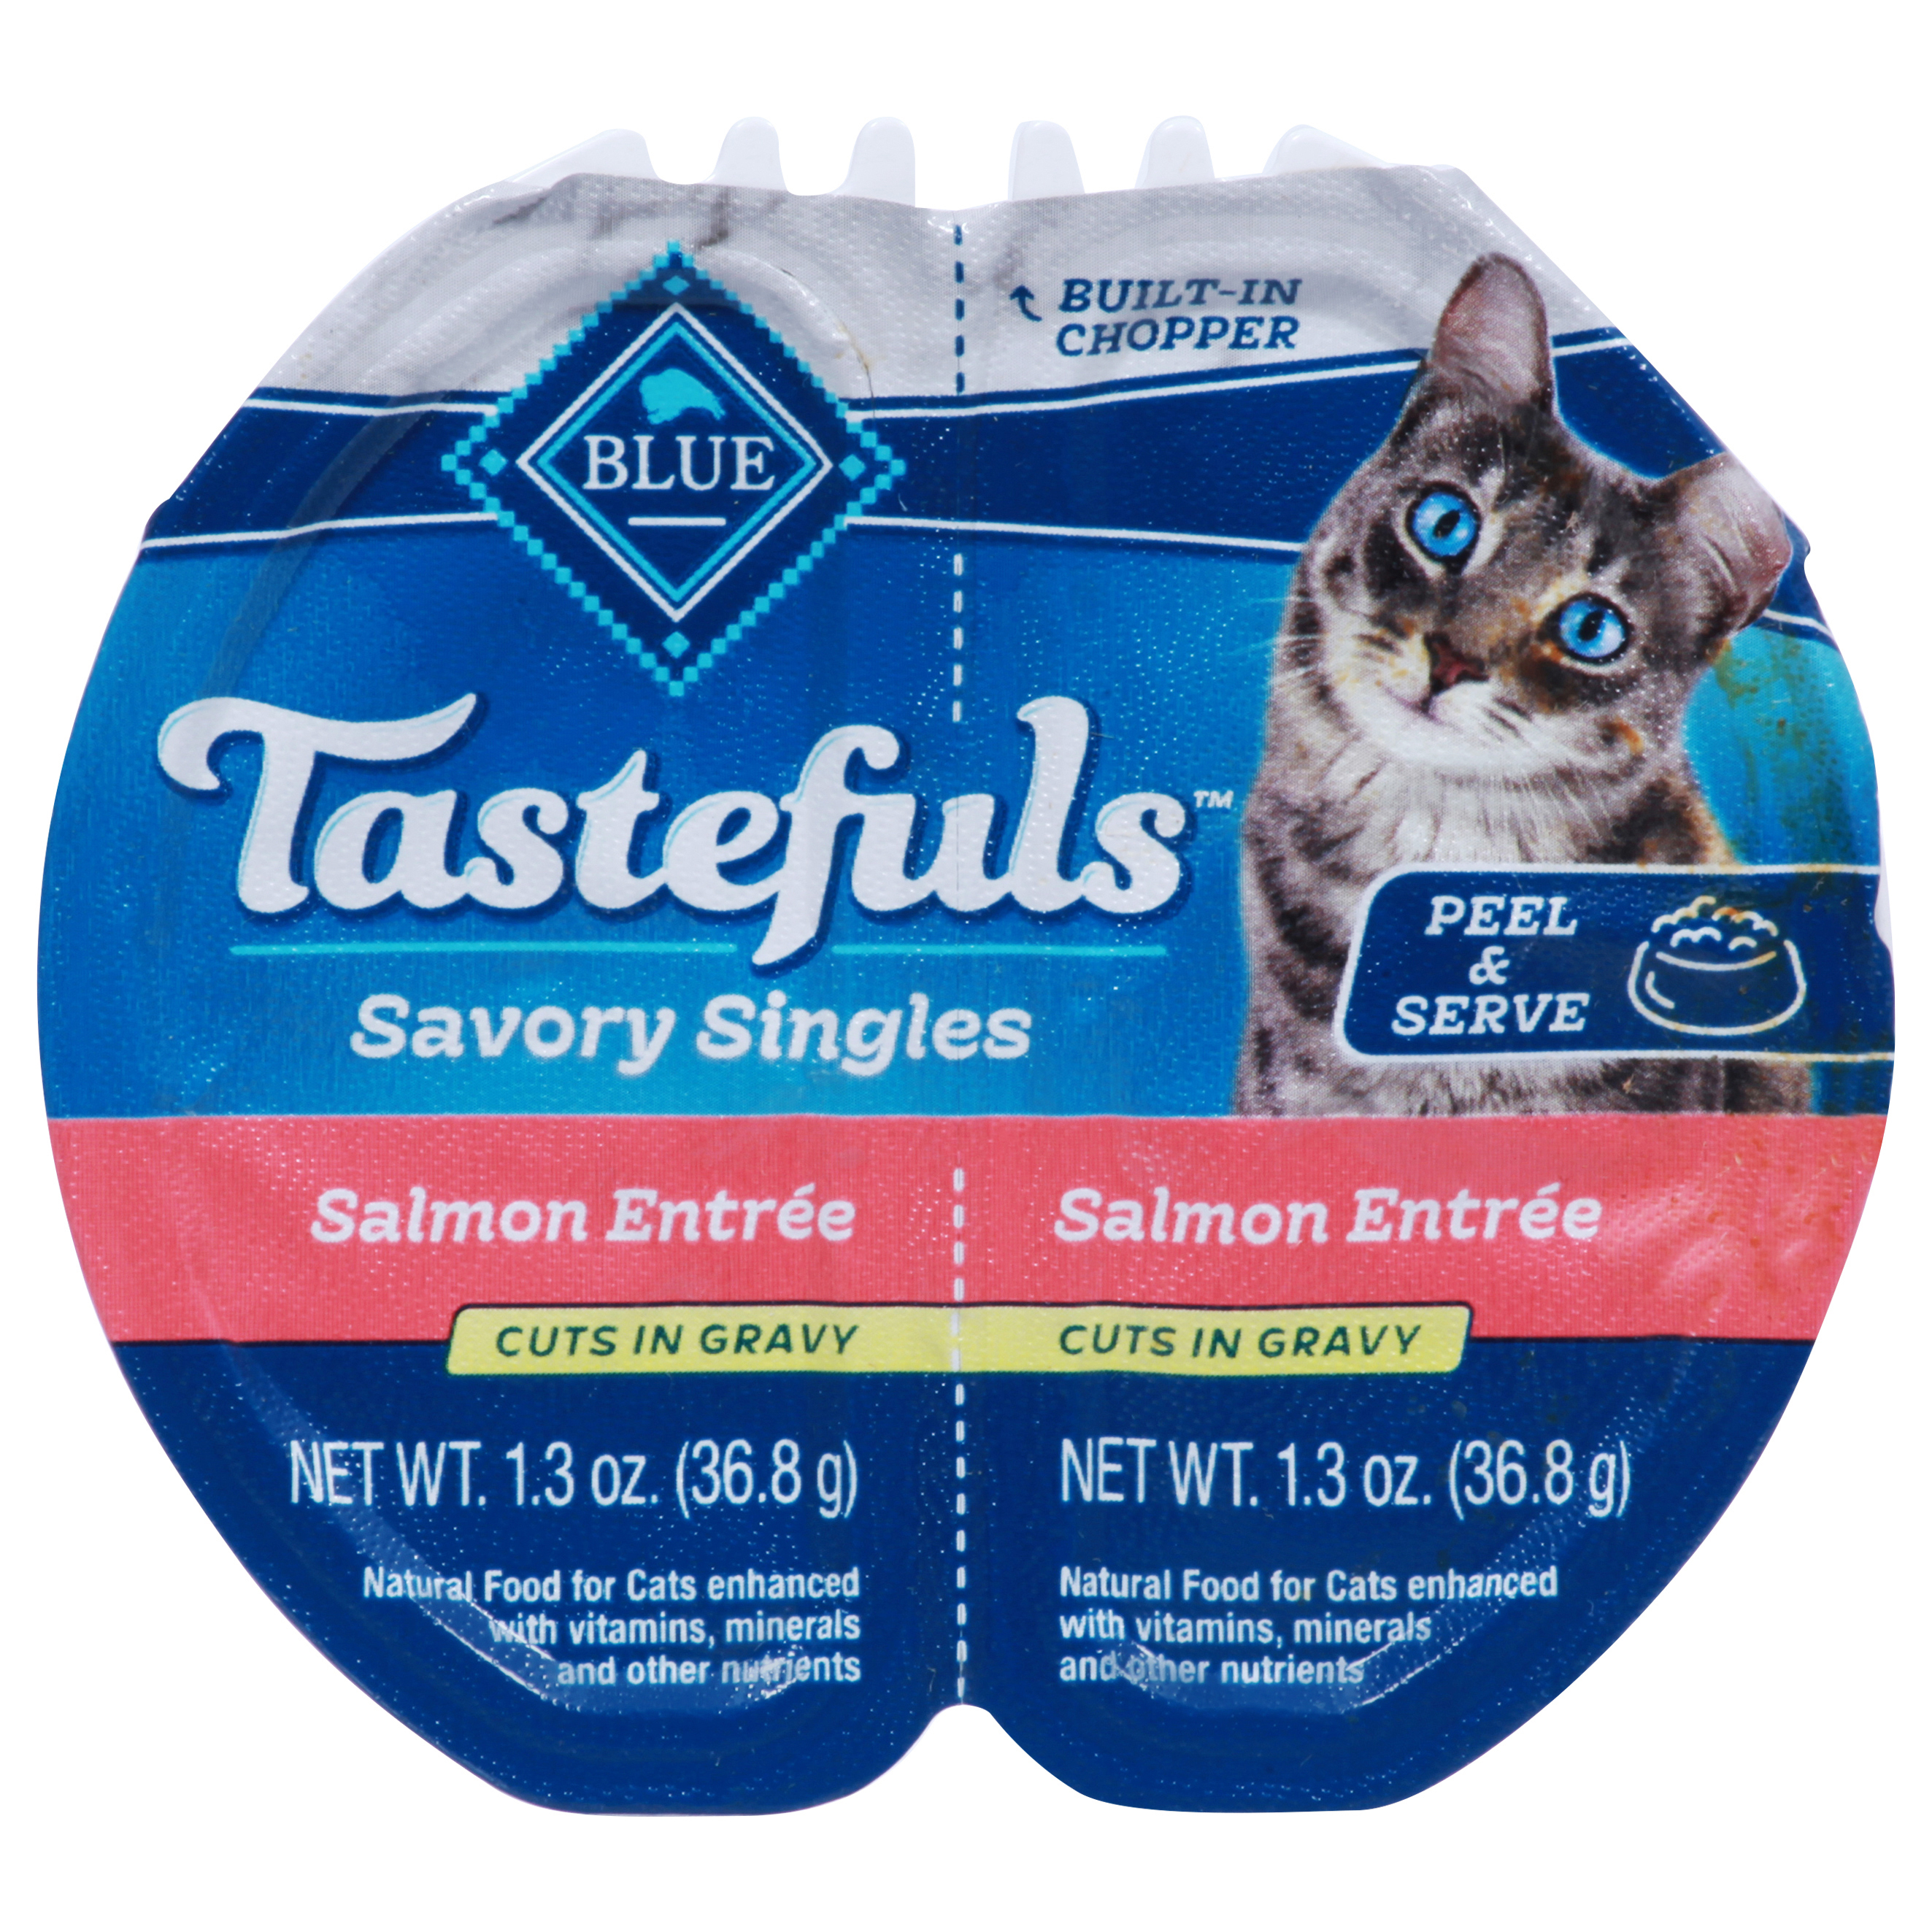 Blue Buffalo Tastefuls Cuts in Gravy Savory Singles Salmon Entree Food for Cats 1.3 ea